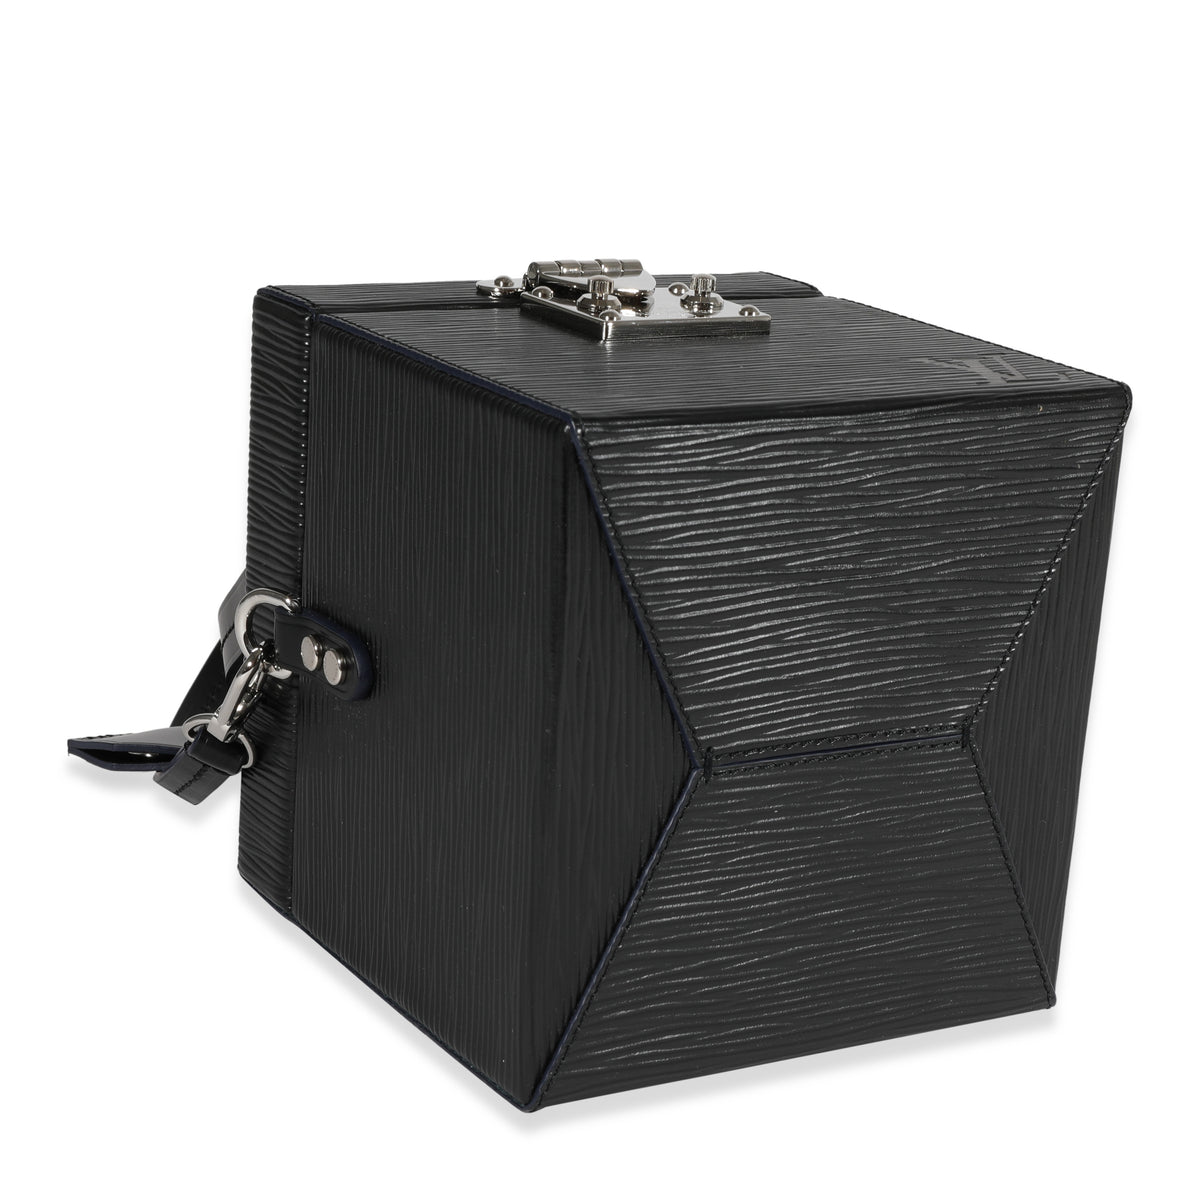 Authentic Brand New Louis Vuitton Bleecker Box in Black Epi